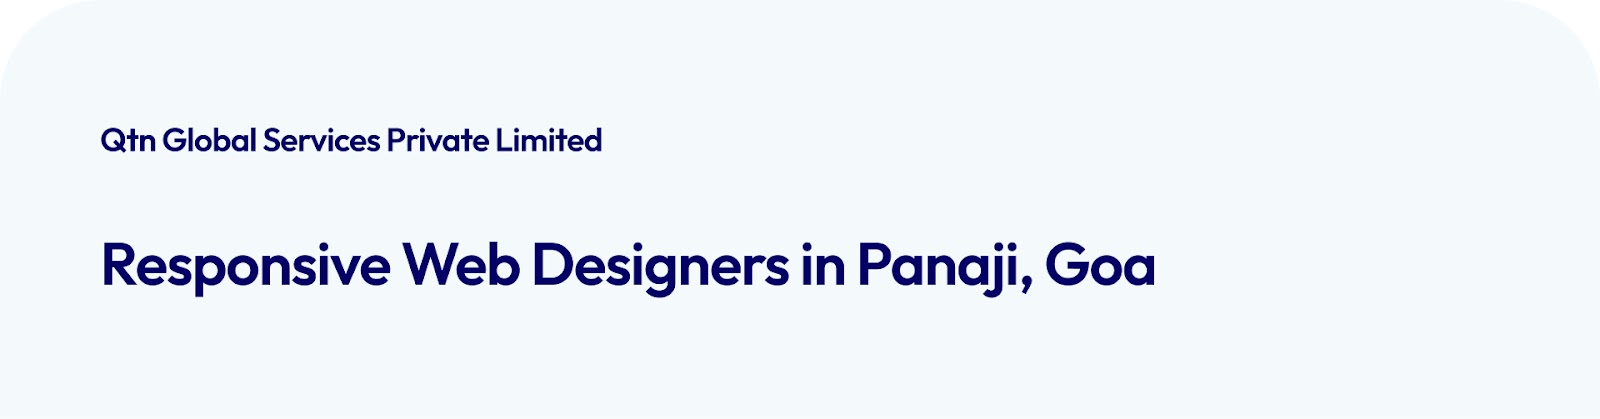 Responsive Web Designers in Panaji, Goa 